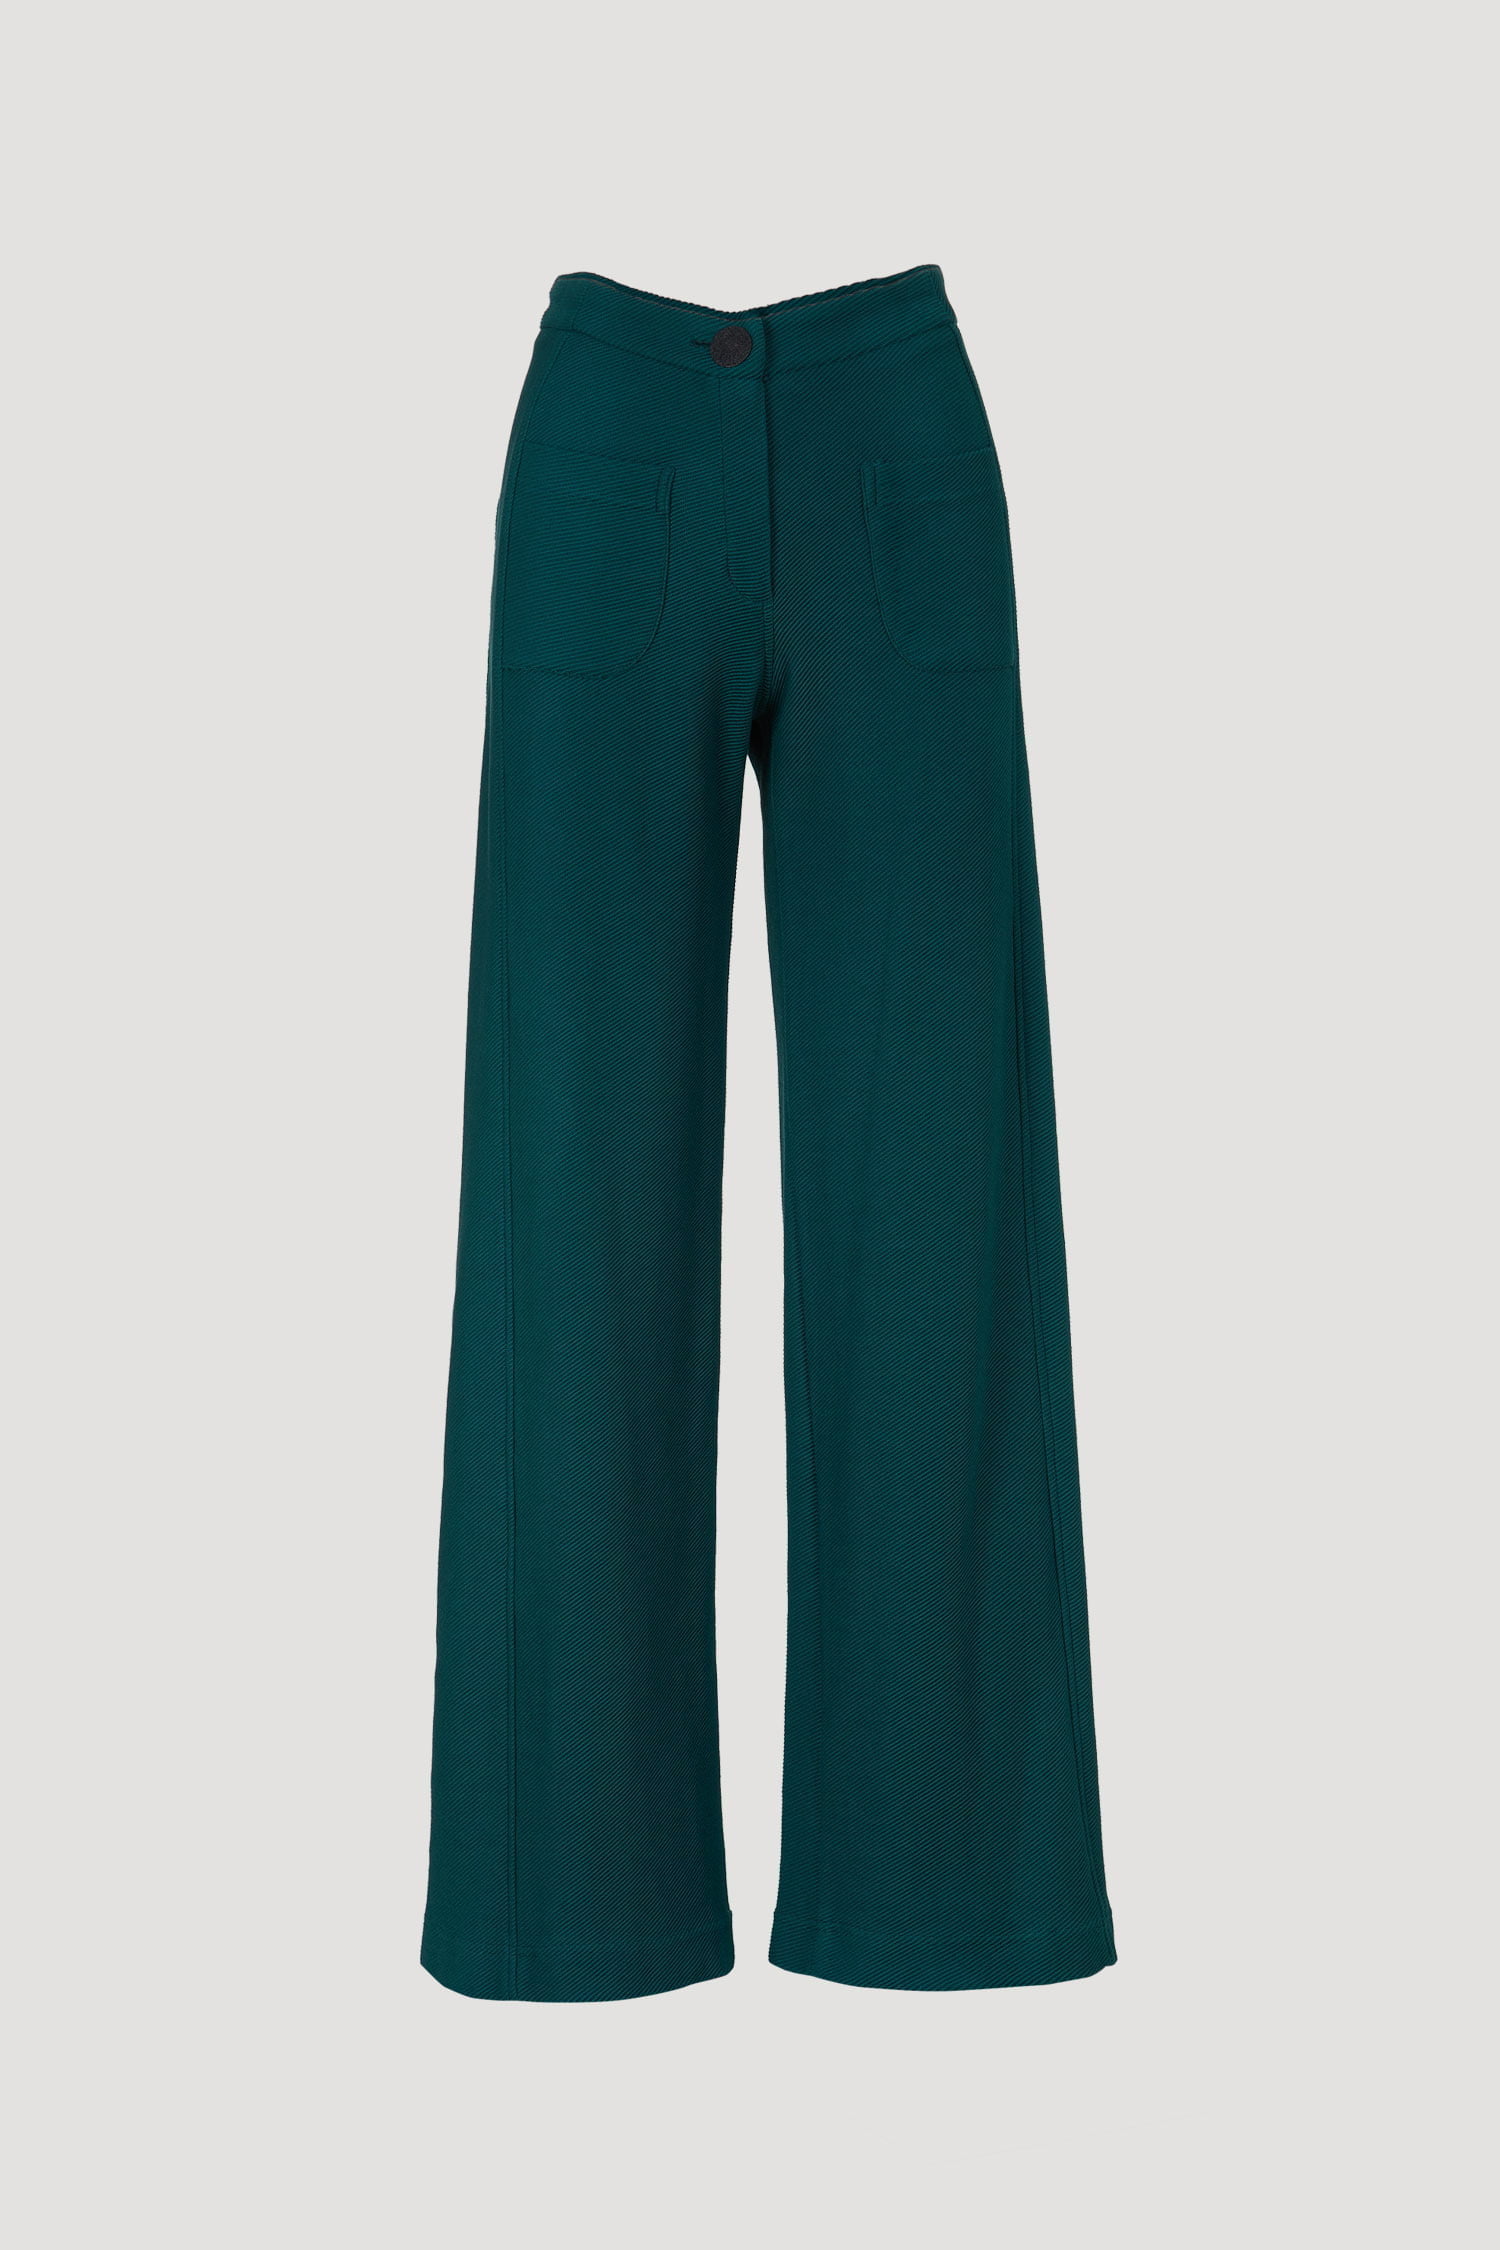 Acephala Fw21 22 Forest Green Trousers